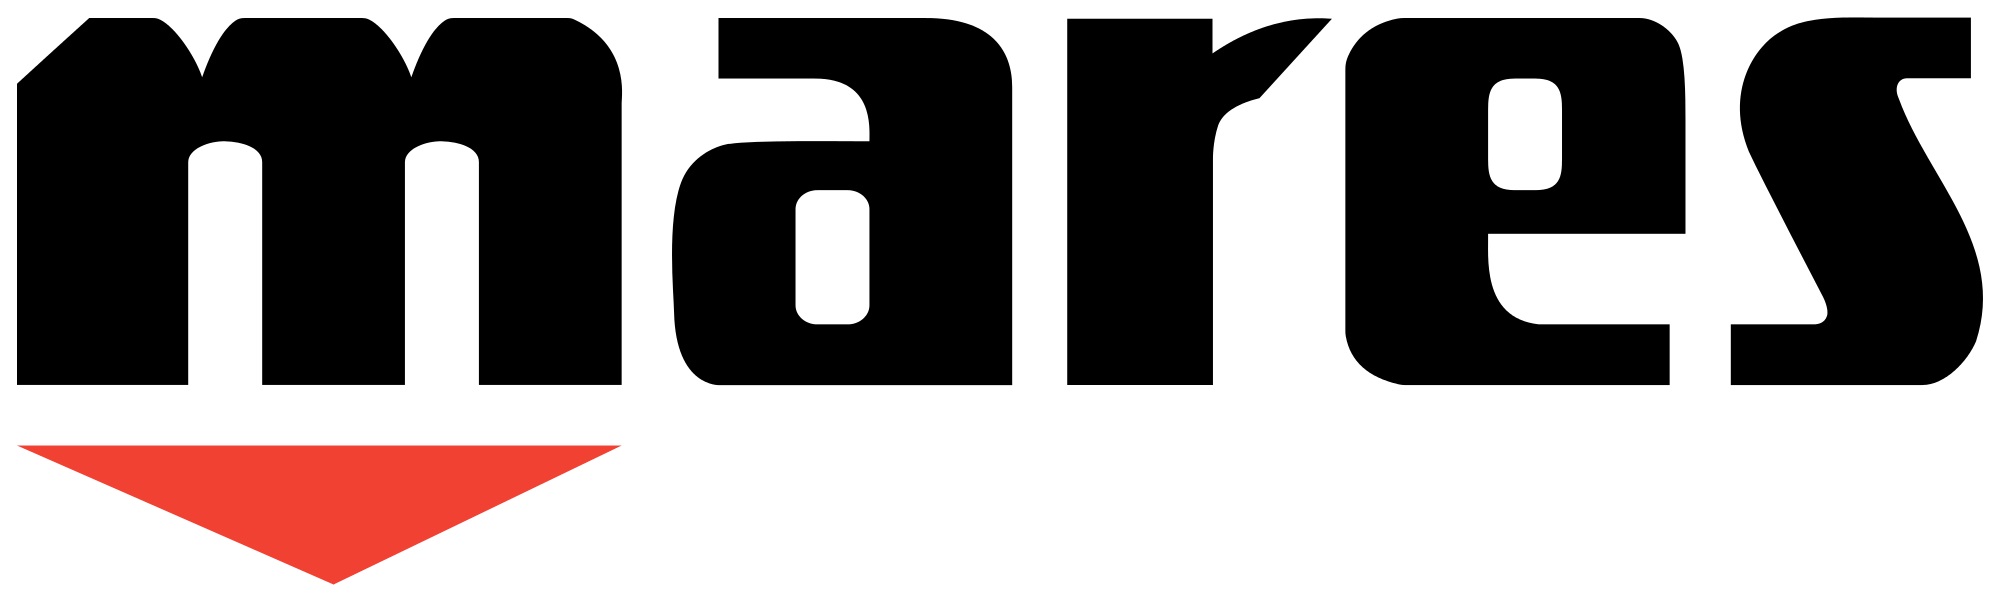 Logo Mares